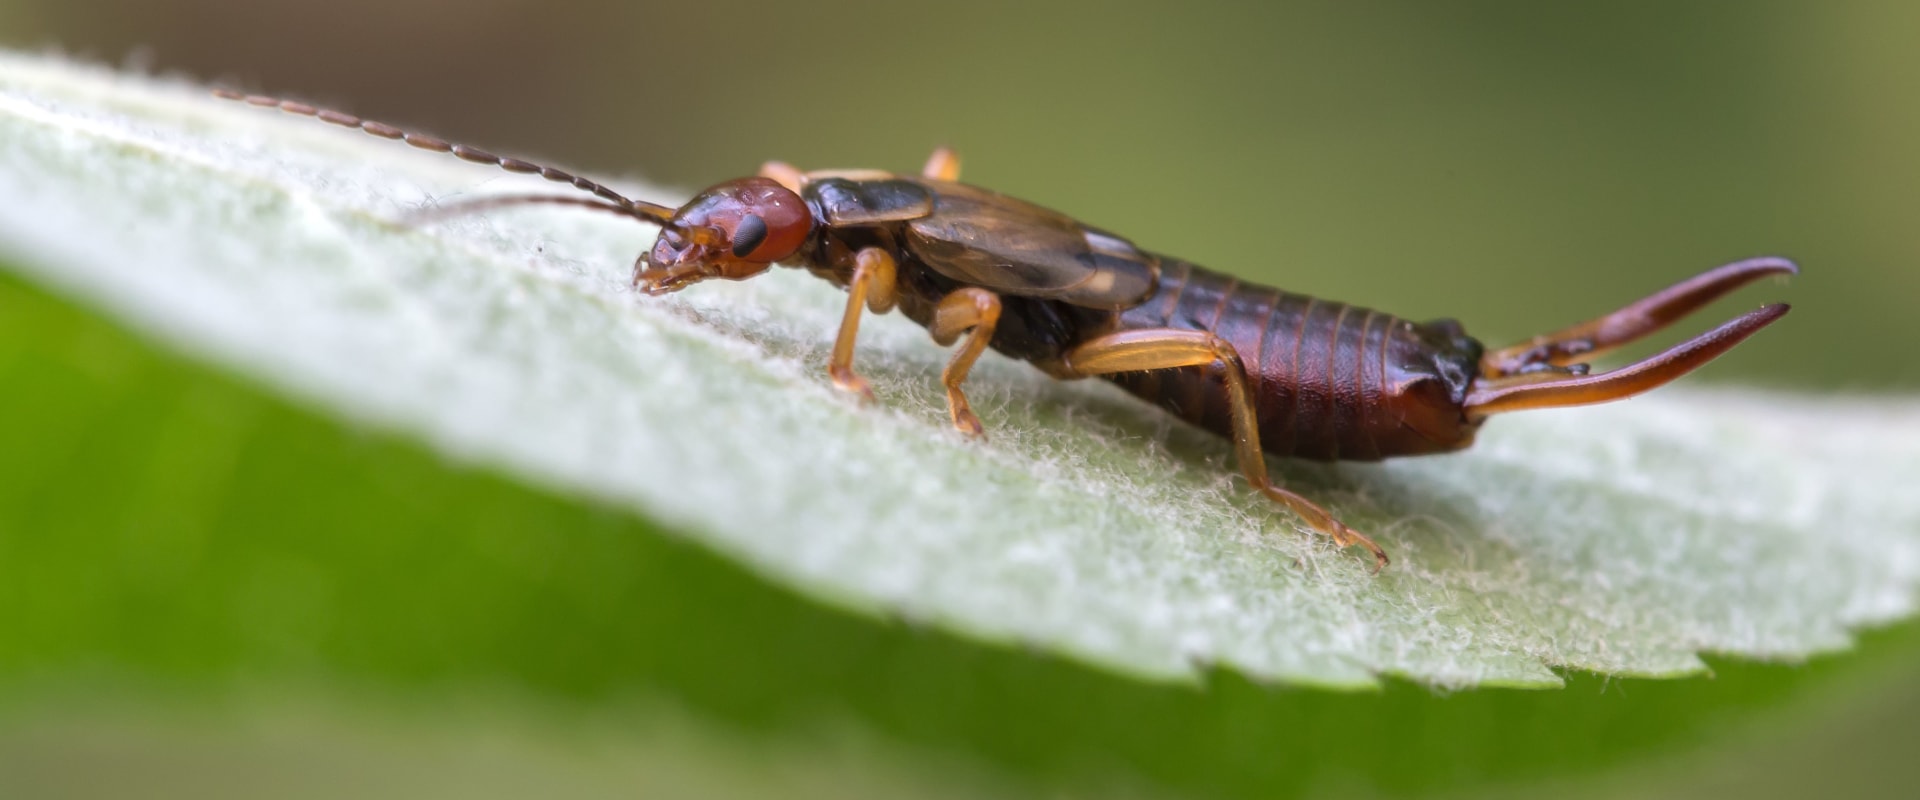 How do you control outdoor bugs?